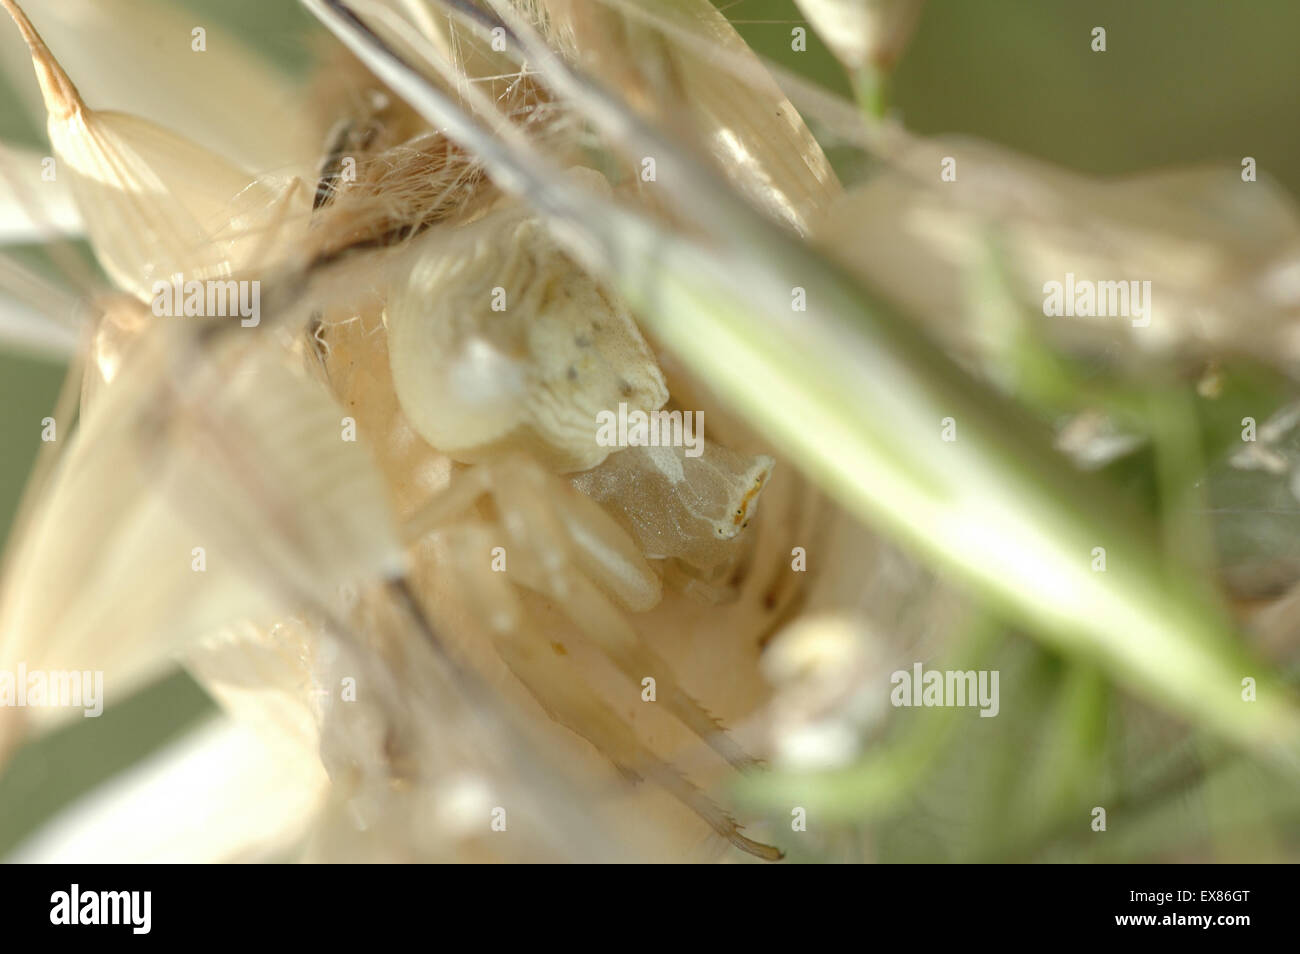 White crab spider (sp) Thomisus onustus, arachnid lurking inside an oat / Avena plant hide Lemnos/ Limnos island, Greece. Stock Photo